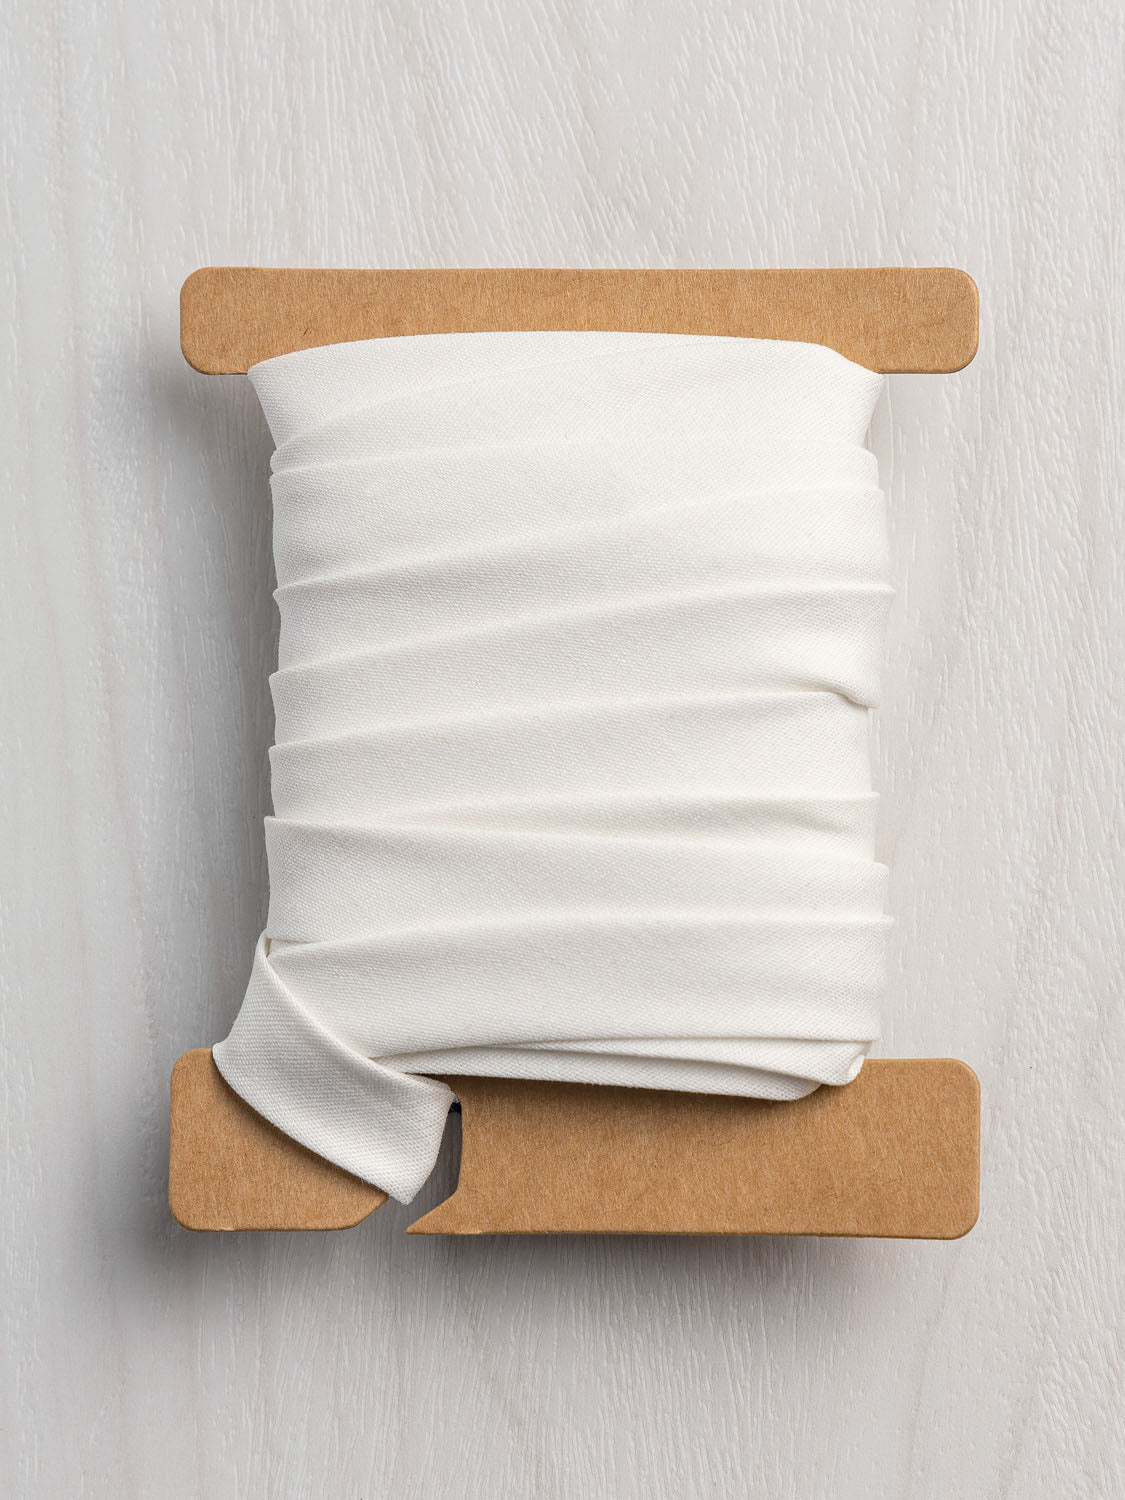 Double-Fold Cotton Poplin Bias Tape - 1/2' (13mm) wide - Cream | Core Fabrics